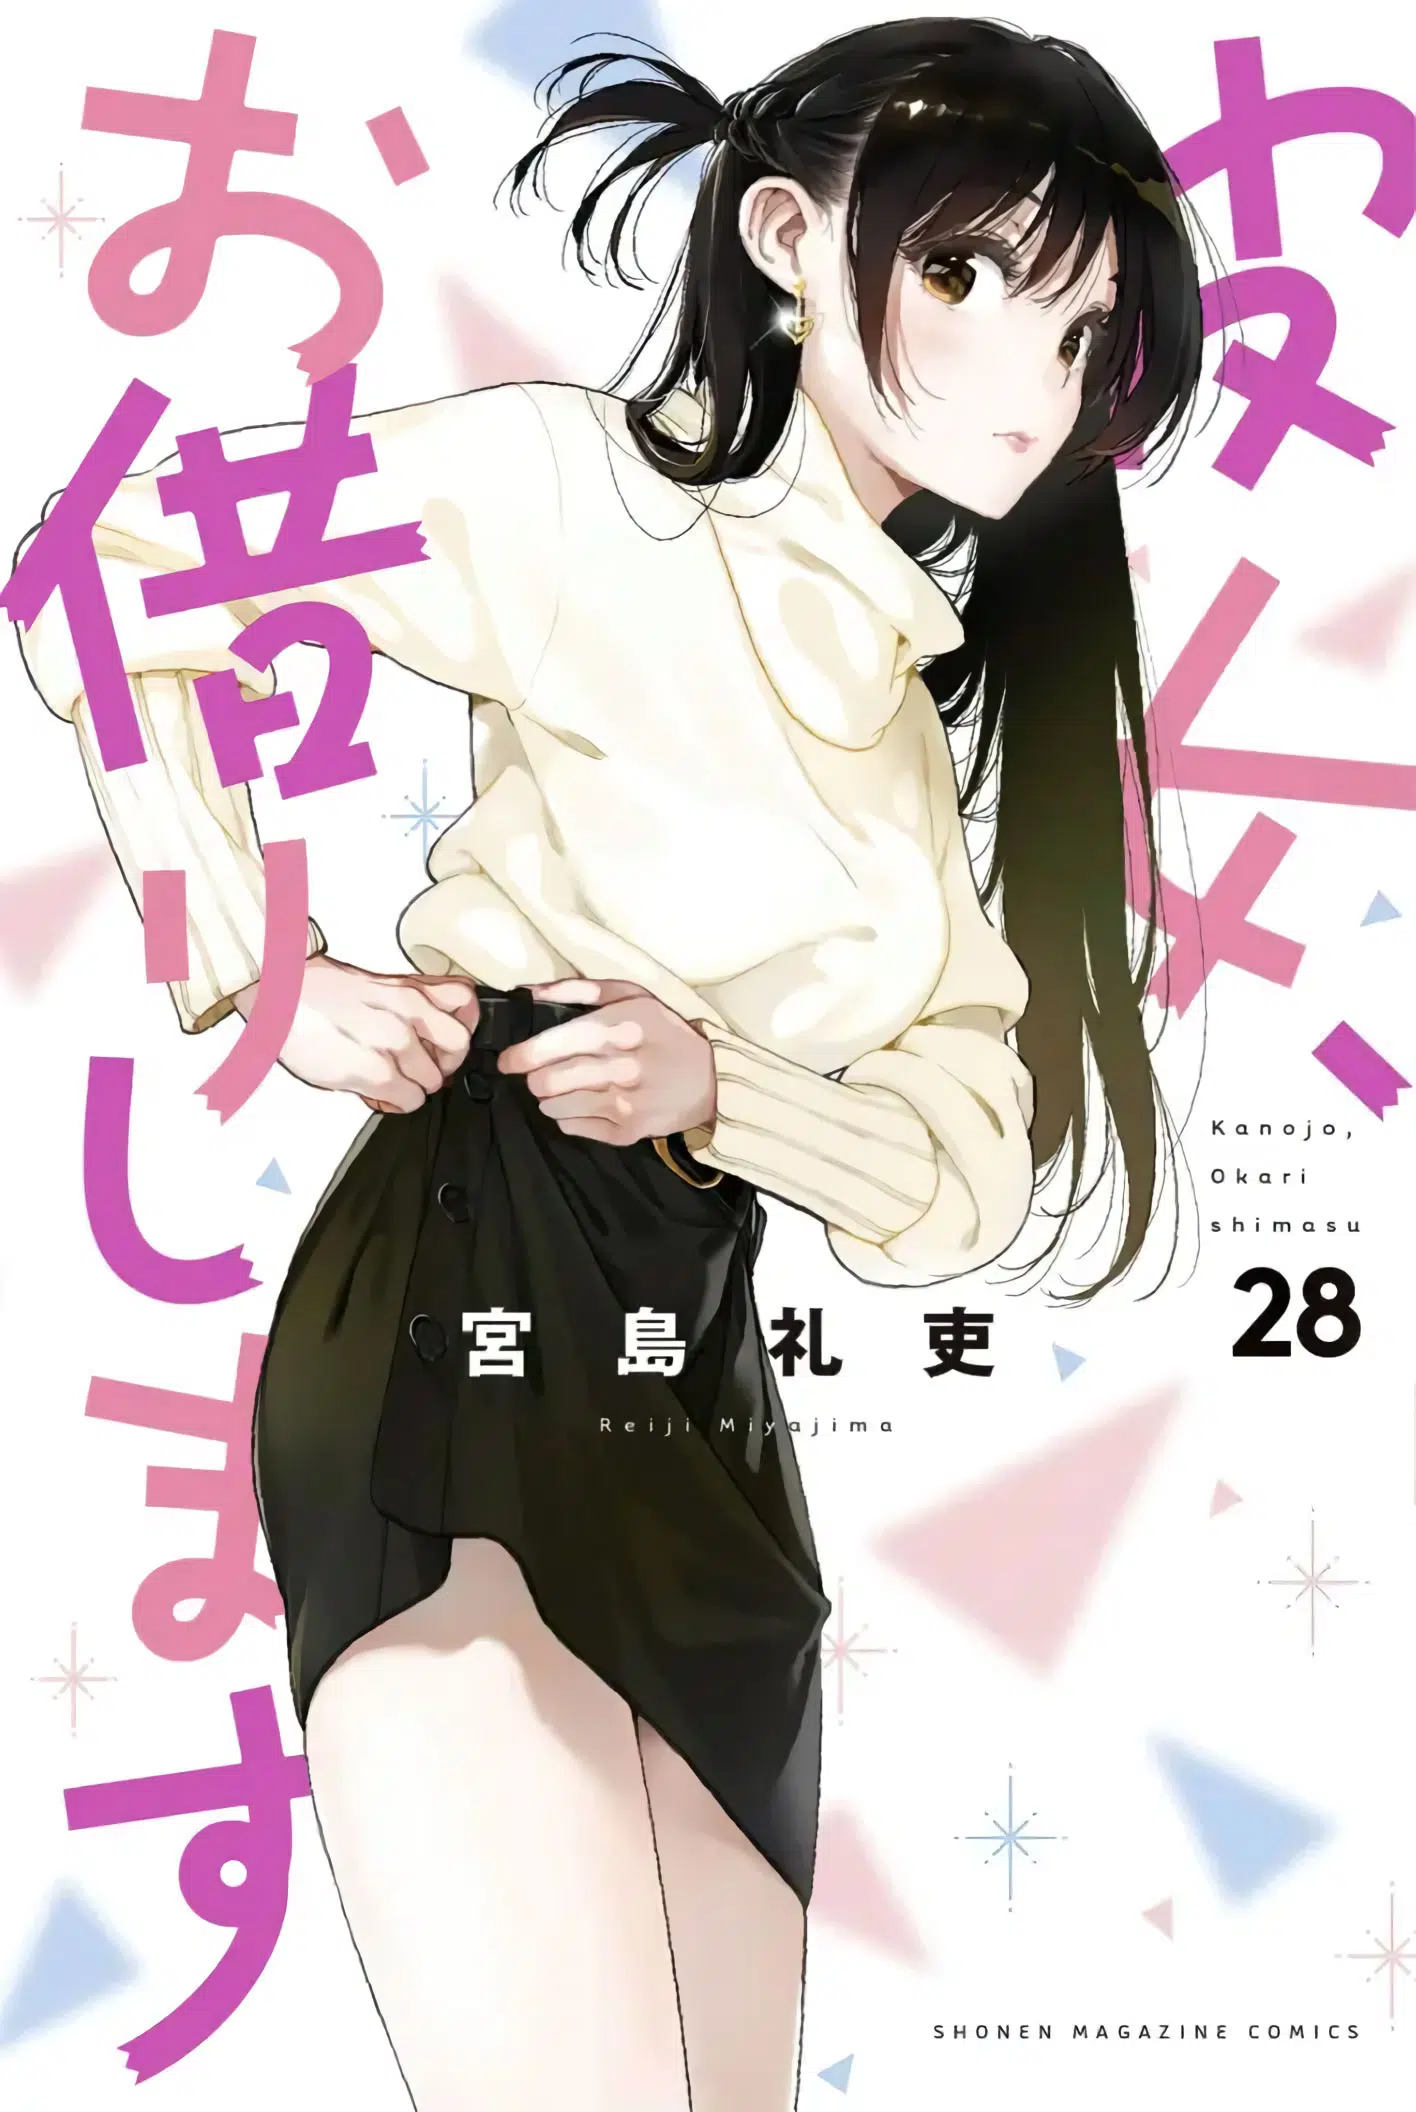 Kanojo Okarishimasu manga vol 28 scaled 1